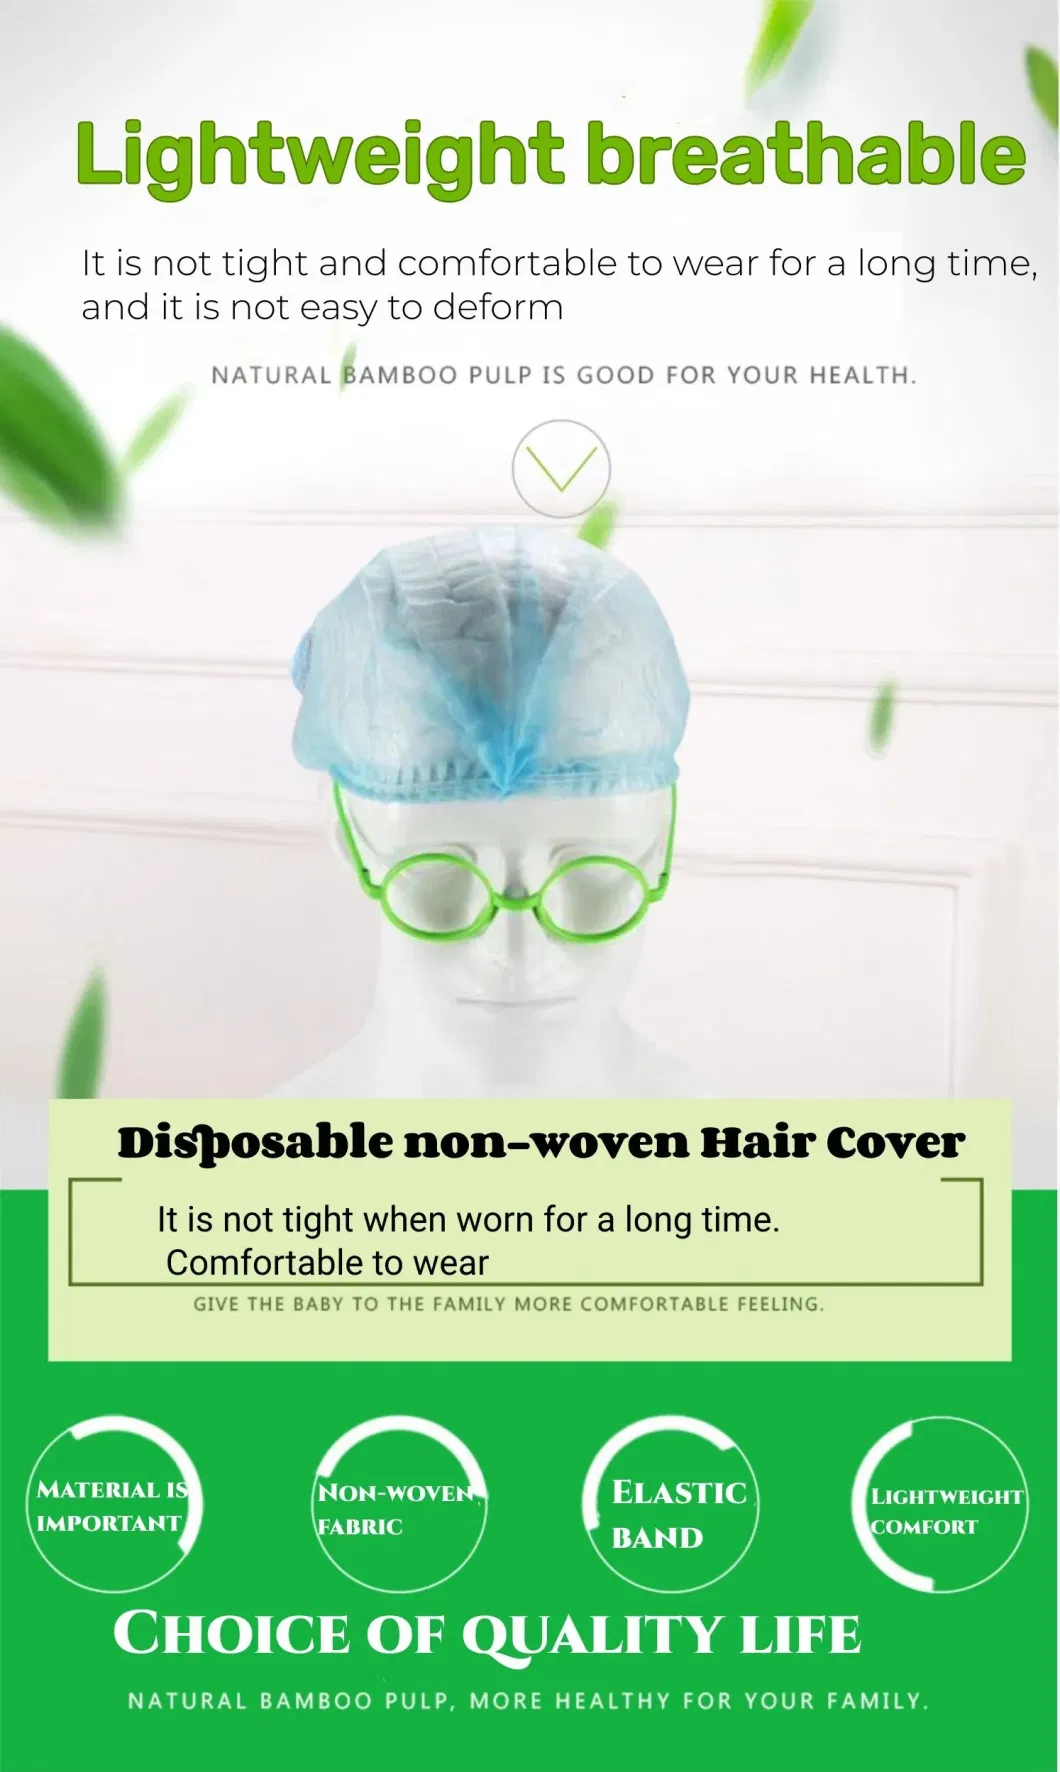 Disposable Non-Woven Fabric Round Cap Bouffant Headcap